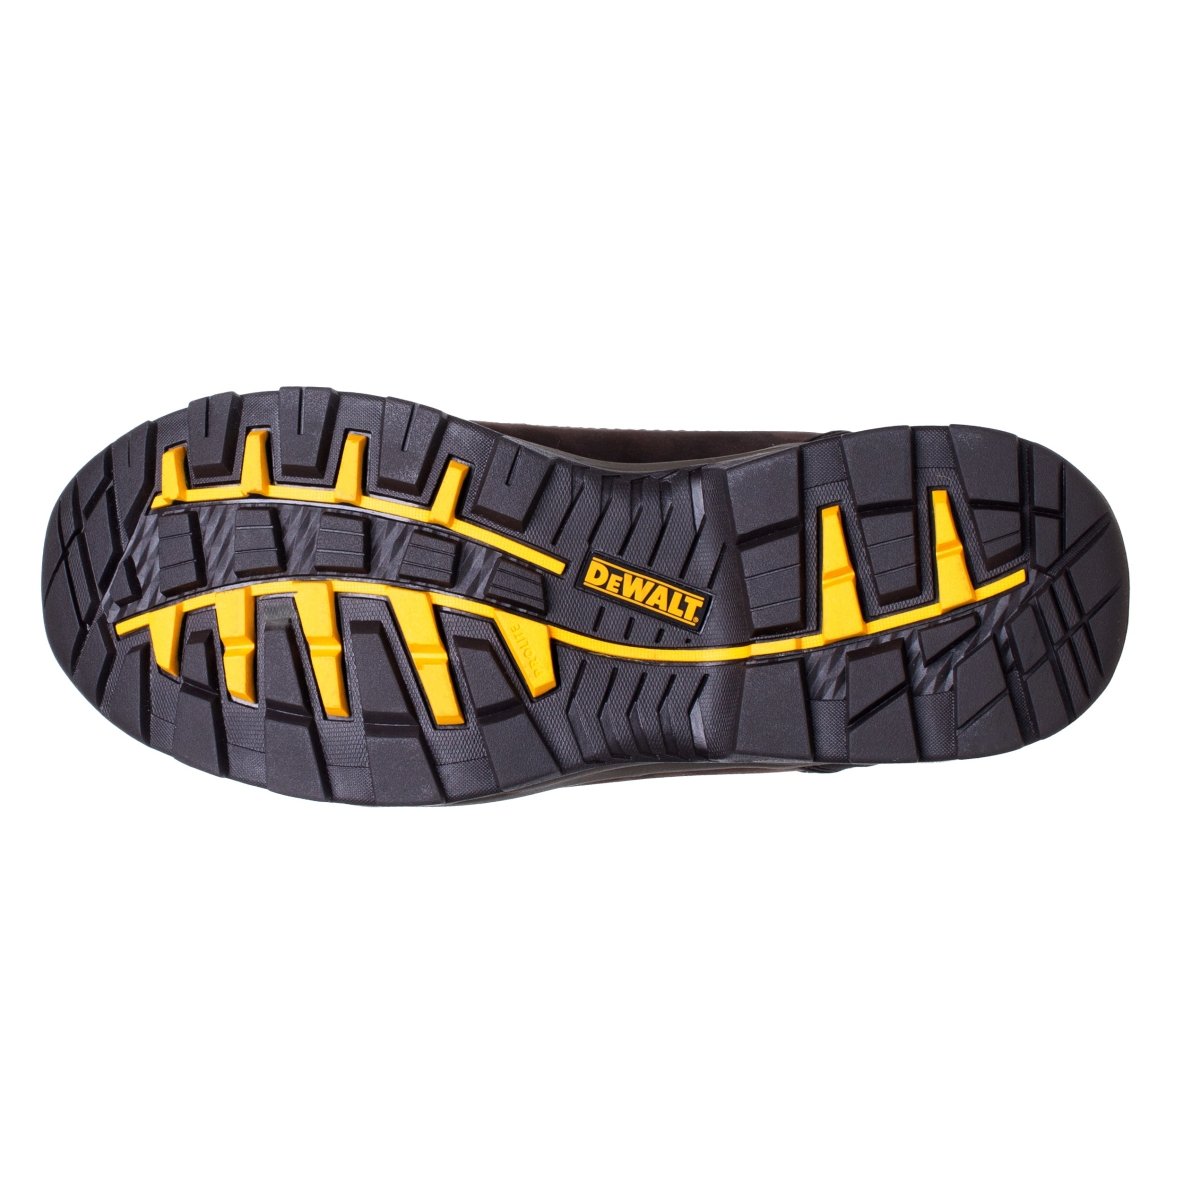 DeWalt Kirksville Pro Lite Safety Hiker Boot - Shoe Store Direct